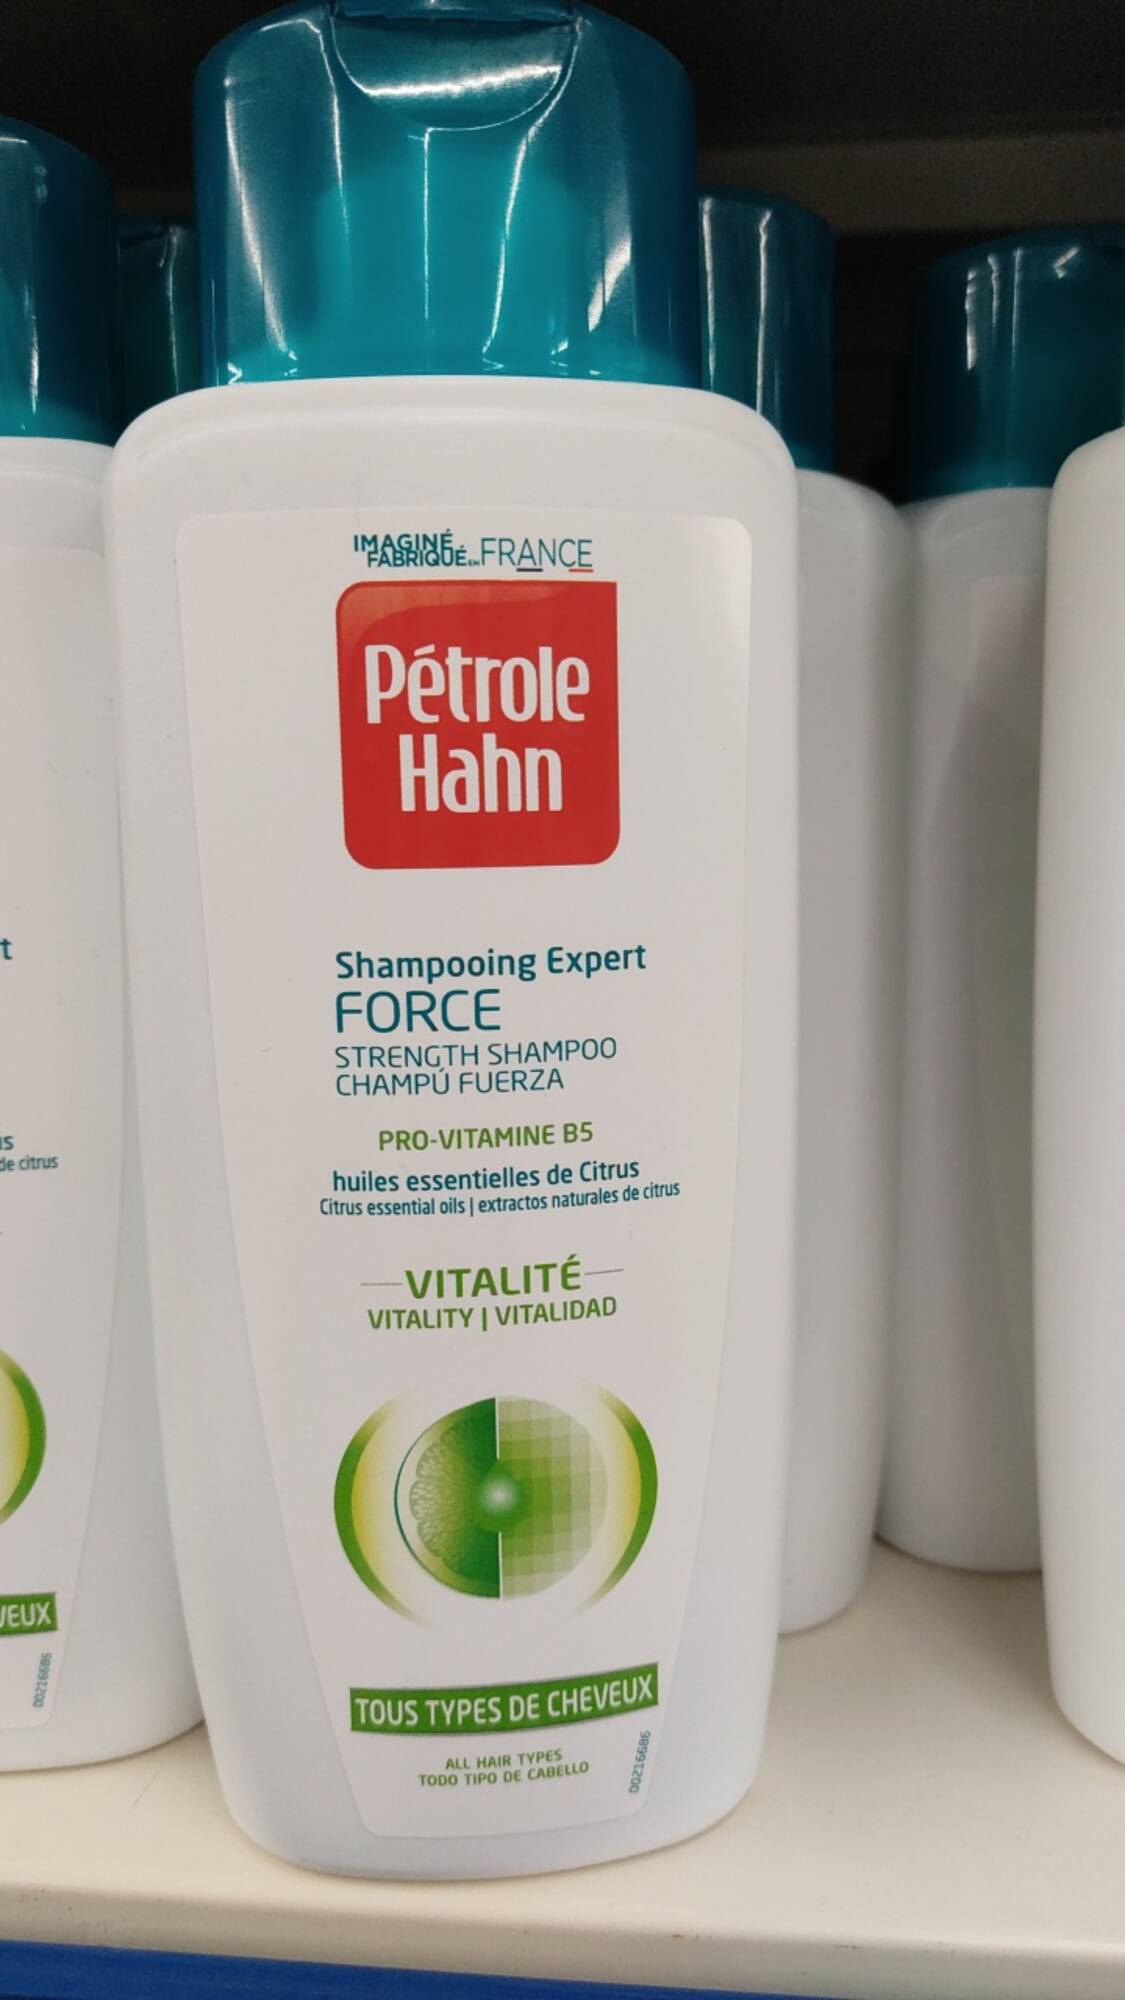 PÉTROLE HAHN - Force - Shampooing expert